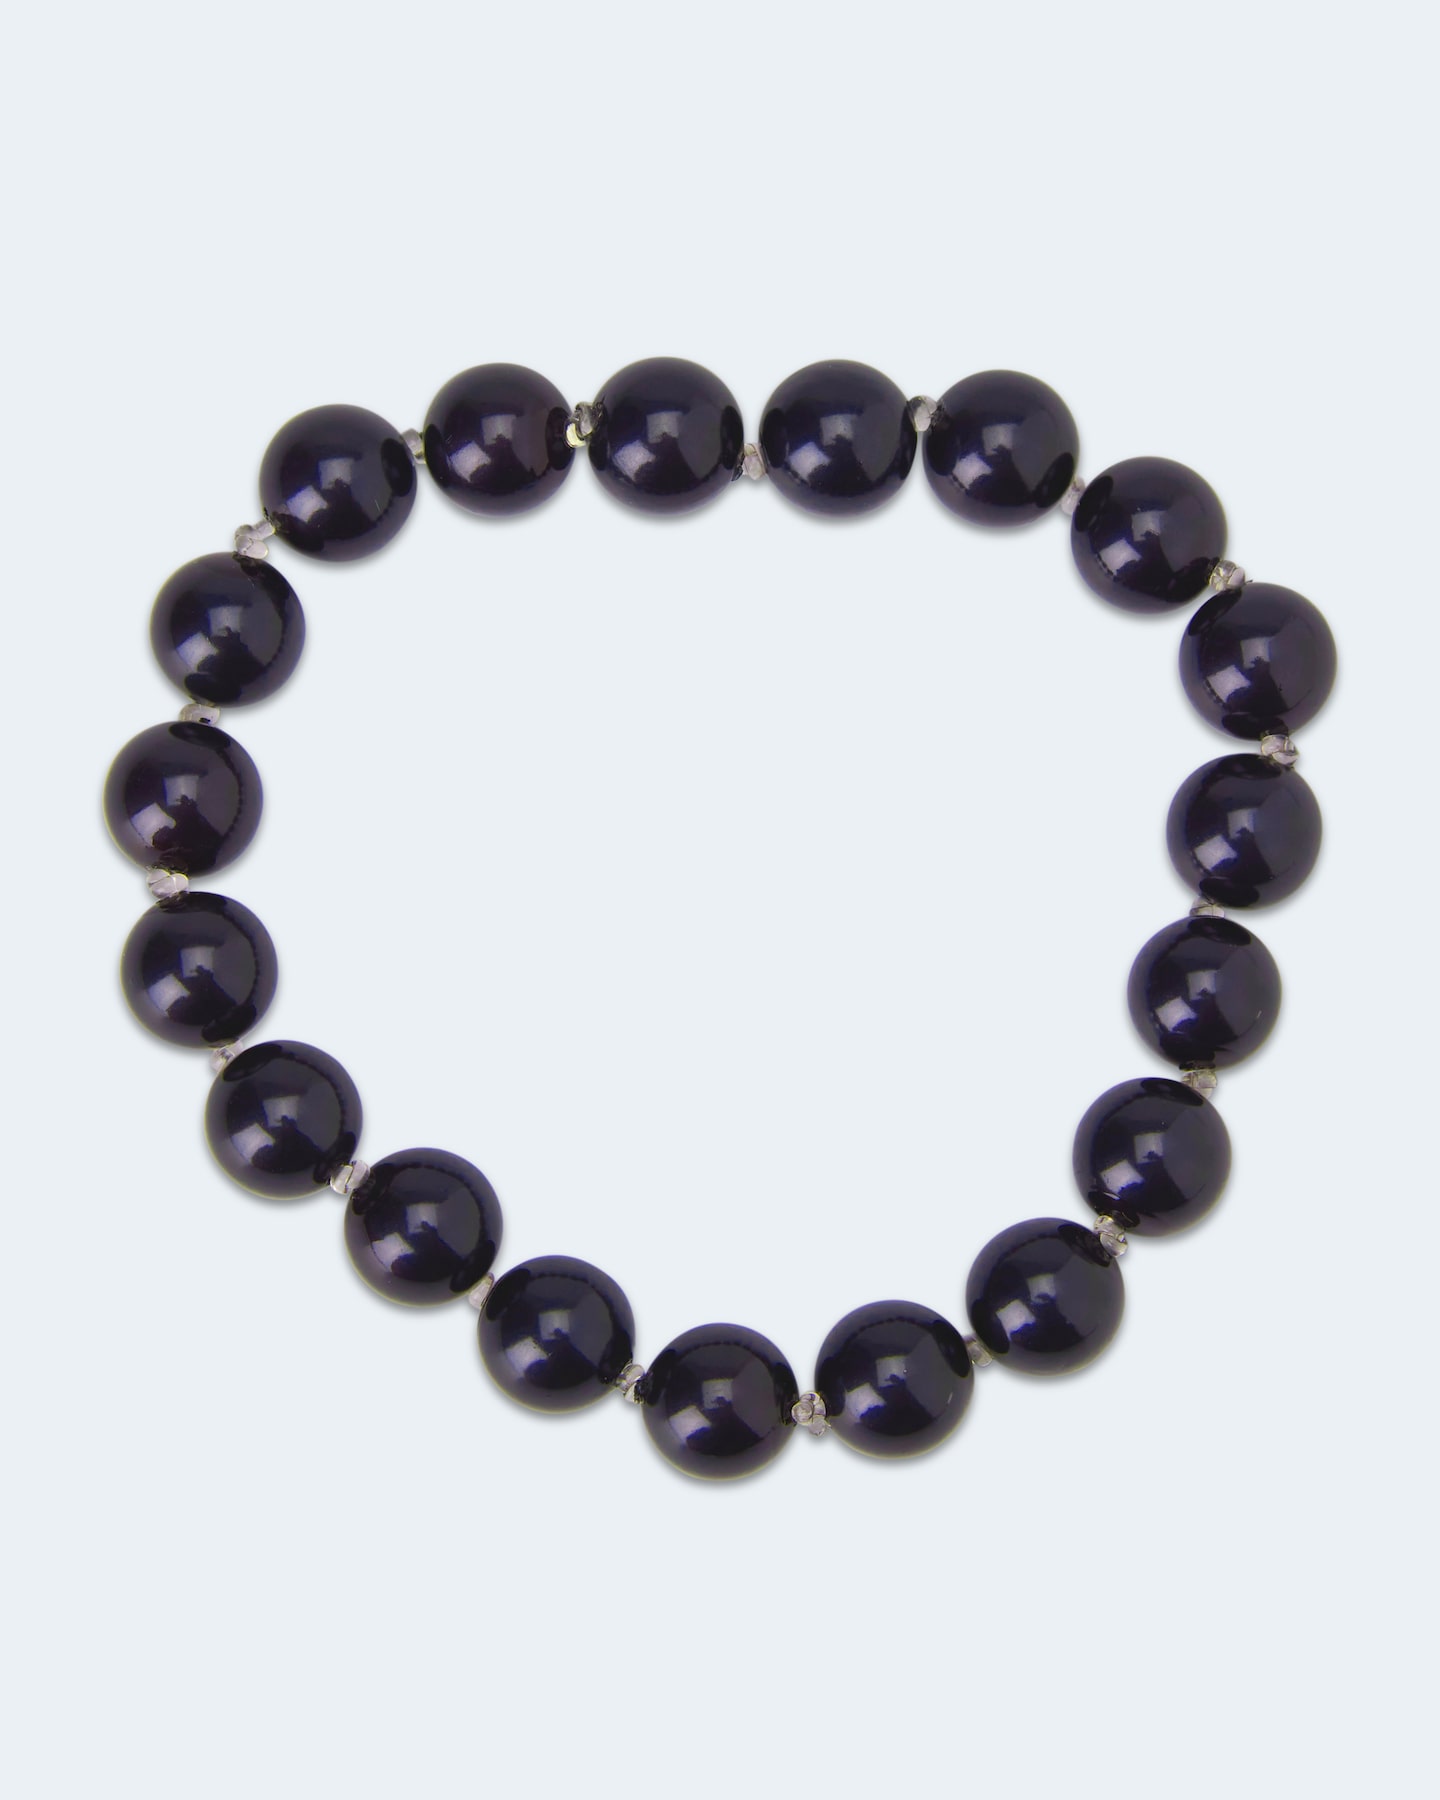 Produktabbildung für Armband aus MK-Perlen, 8 mm